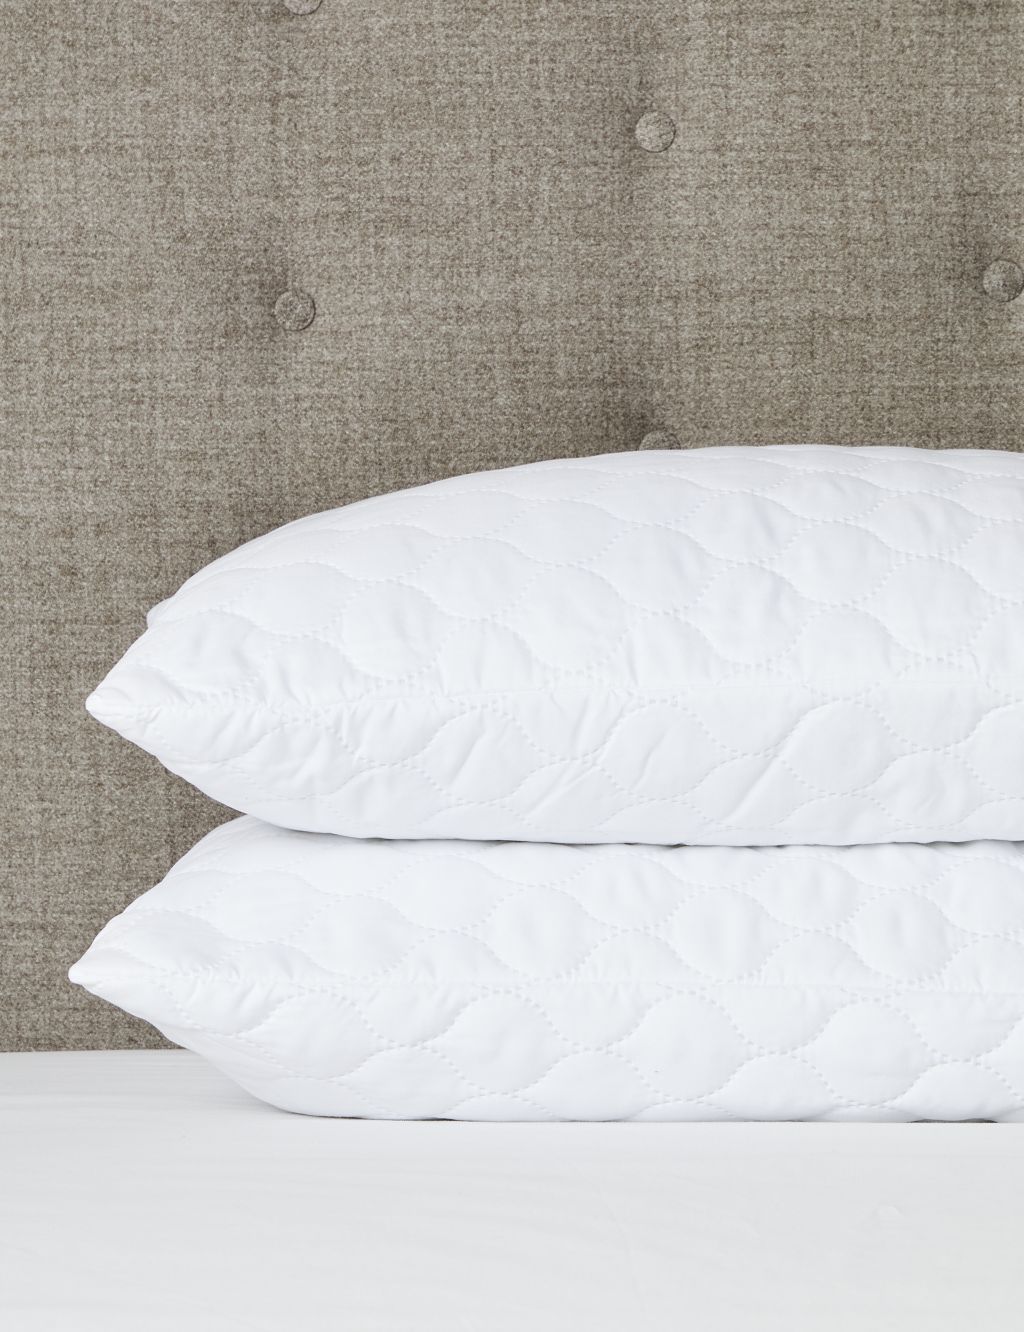 2pk Warm & Toasty Medium Pillows image 4